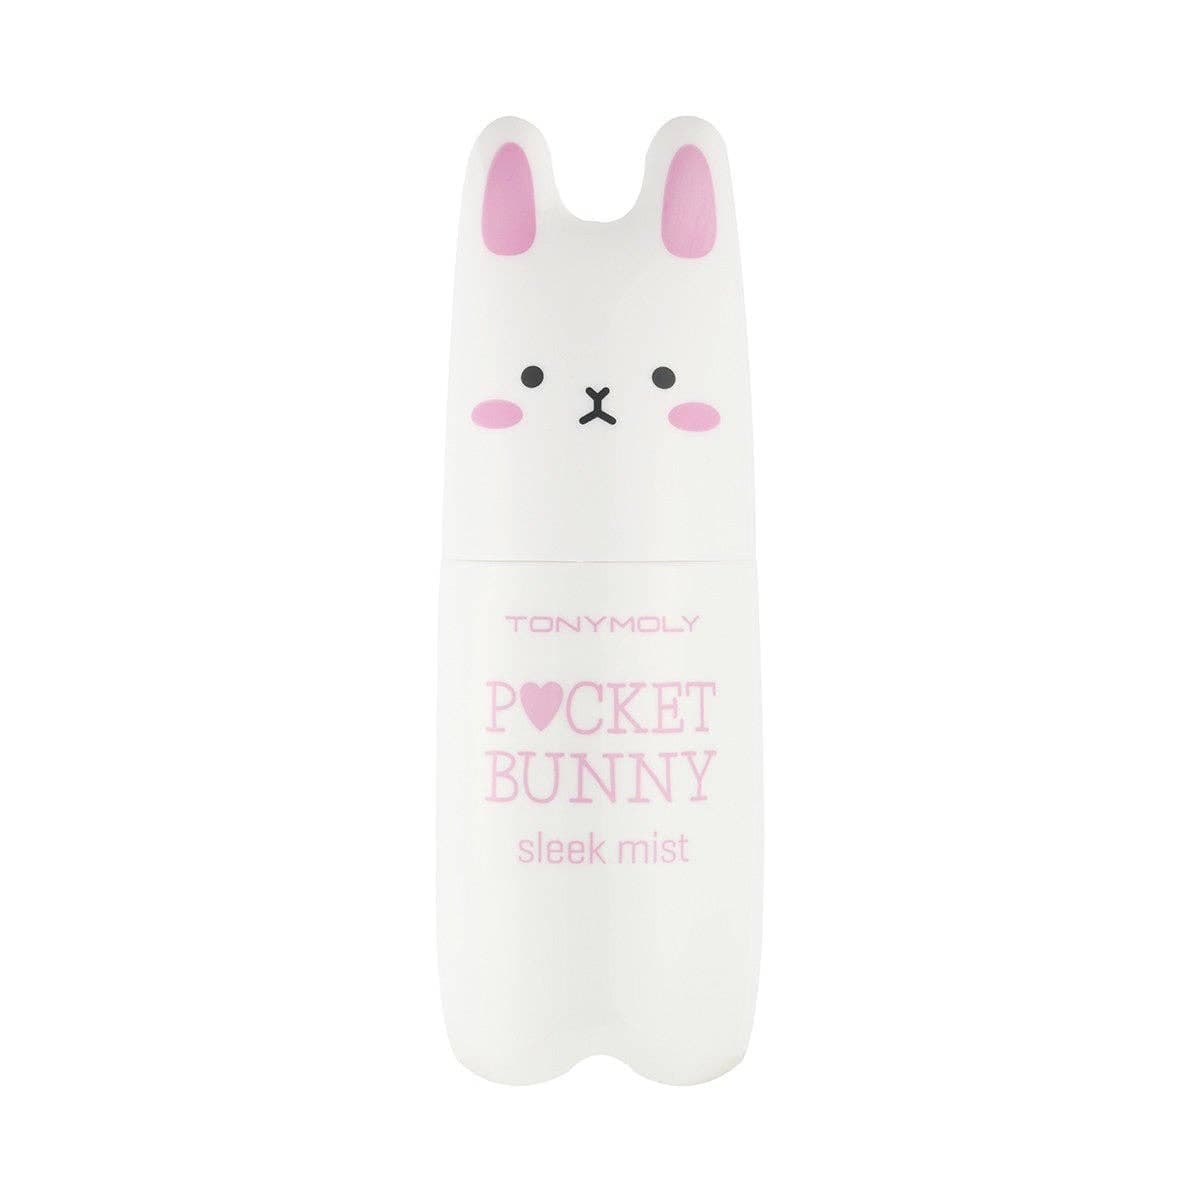 TONYMOLY Pocket Bunny Mist Sleek Mist Kawaii Gifts 8806358557706